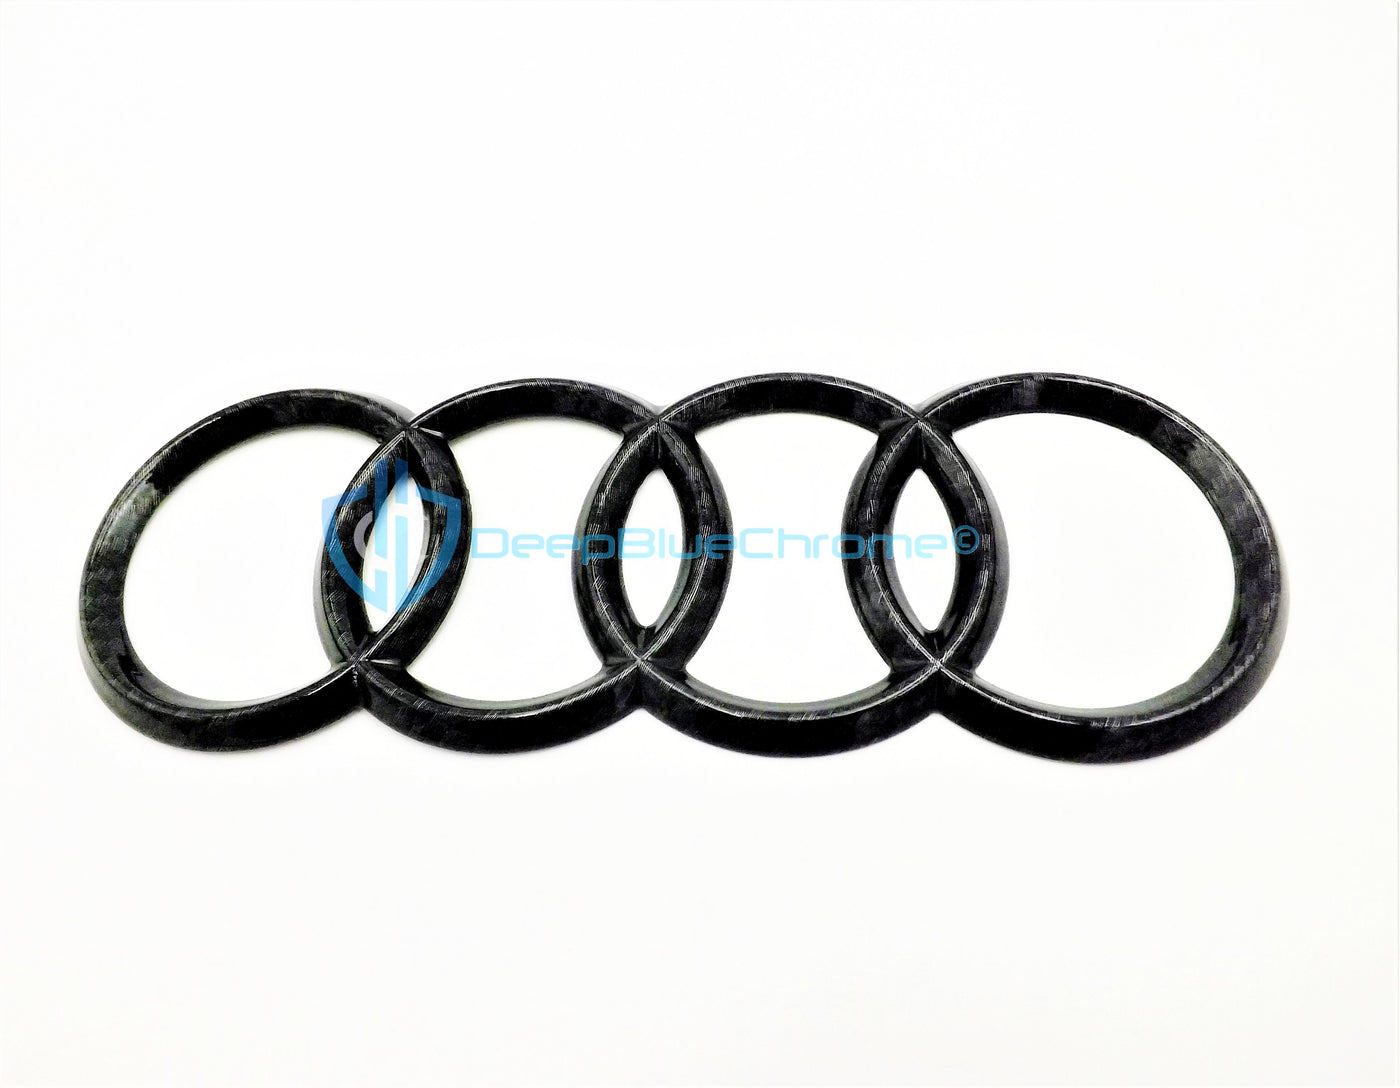 Audi A4 S4 RS5 Black Carbon Fiber Rings Emblem Rear Trunk Lid Genuine OEM Badge Logo